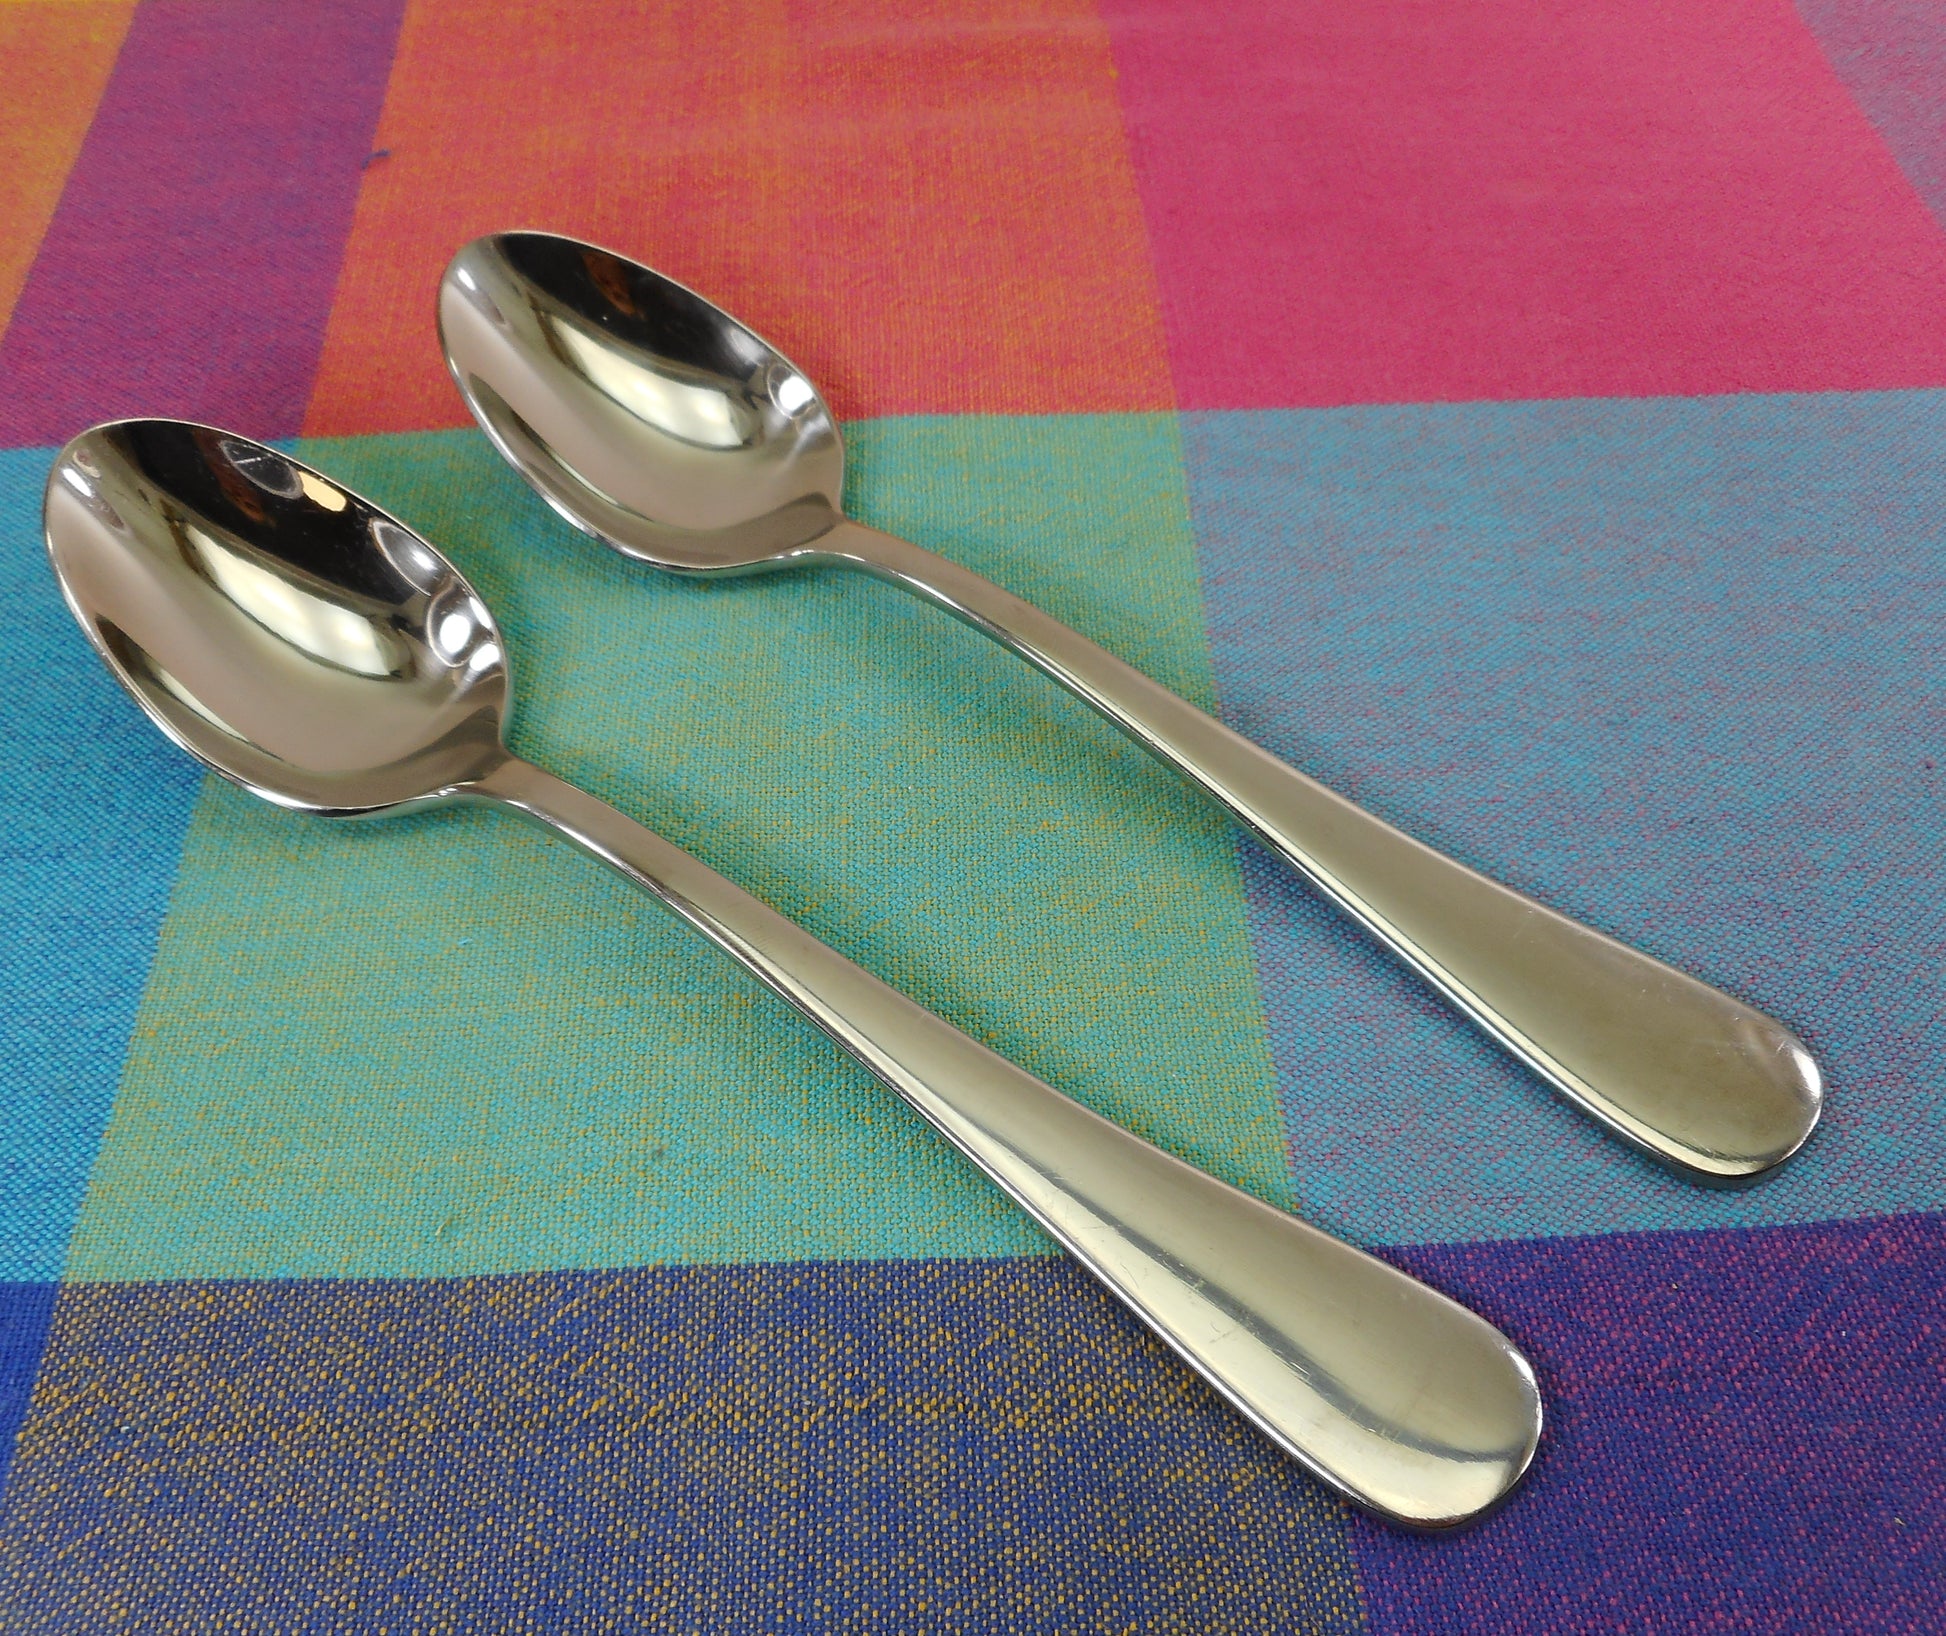 Splendide Cirrus Stainless Steel Flatware - 2 Place Spoons